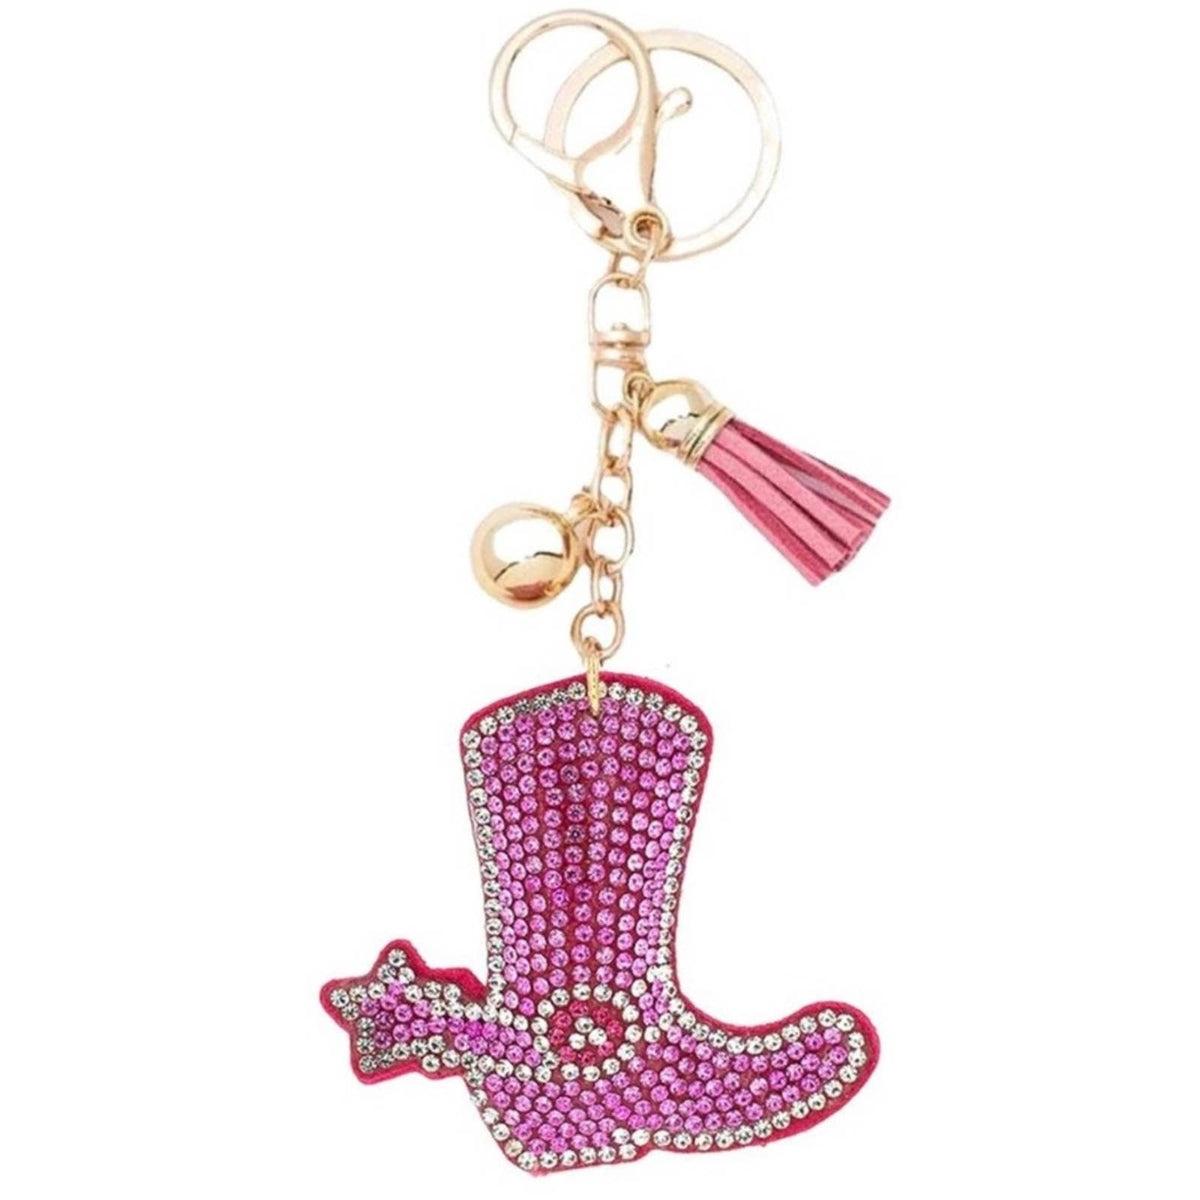 New Bling Pink Rhinestone Cowgirl Boot Puffy Key Chain Purse Charm